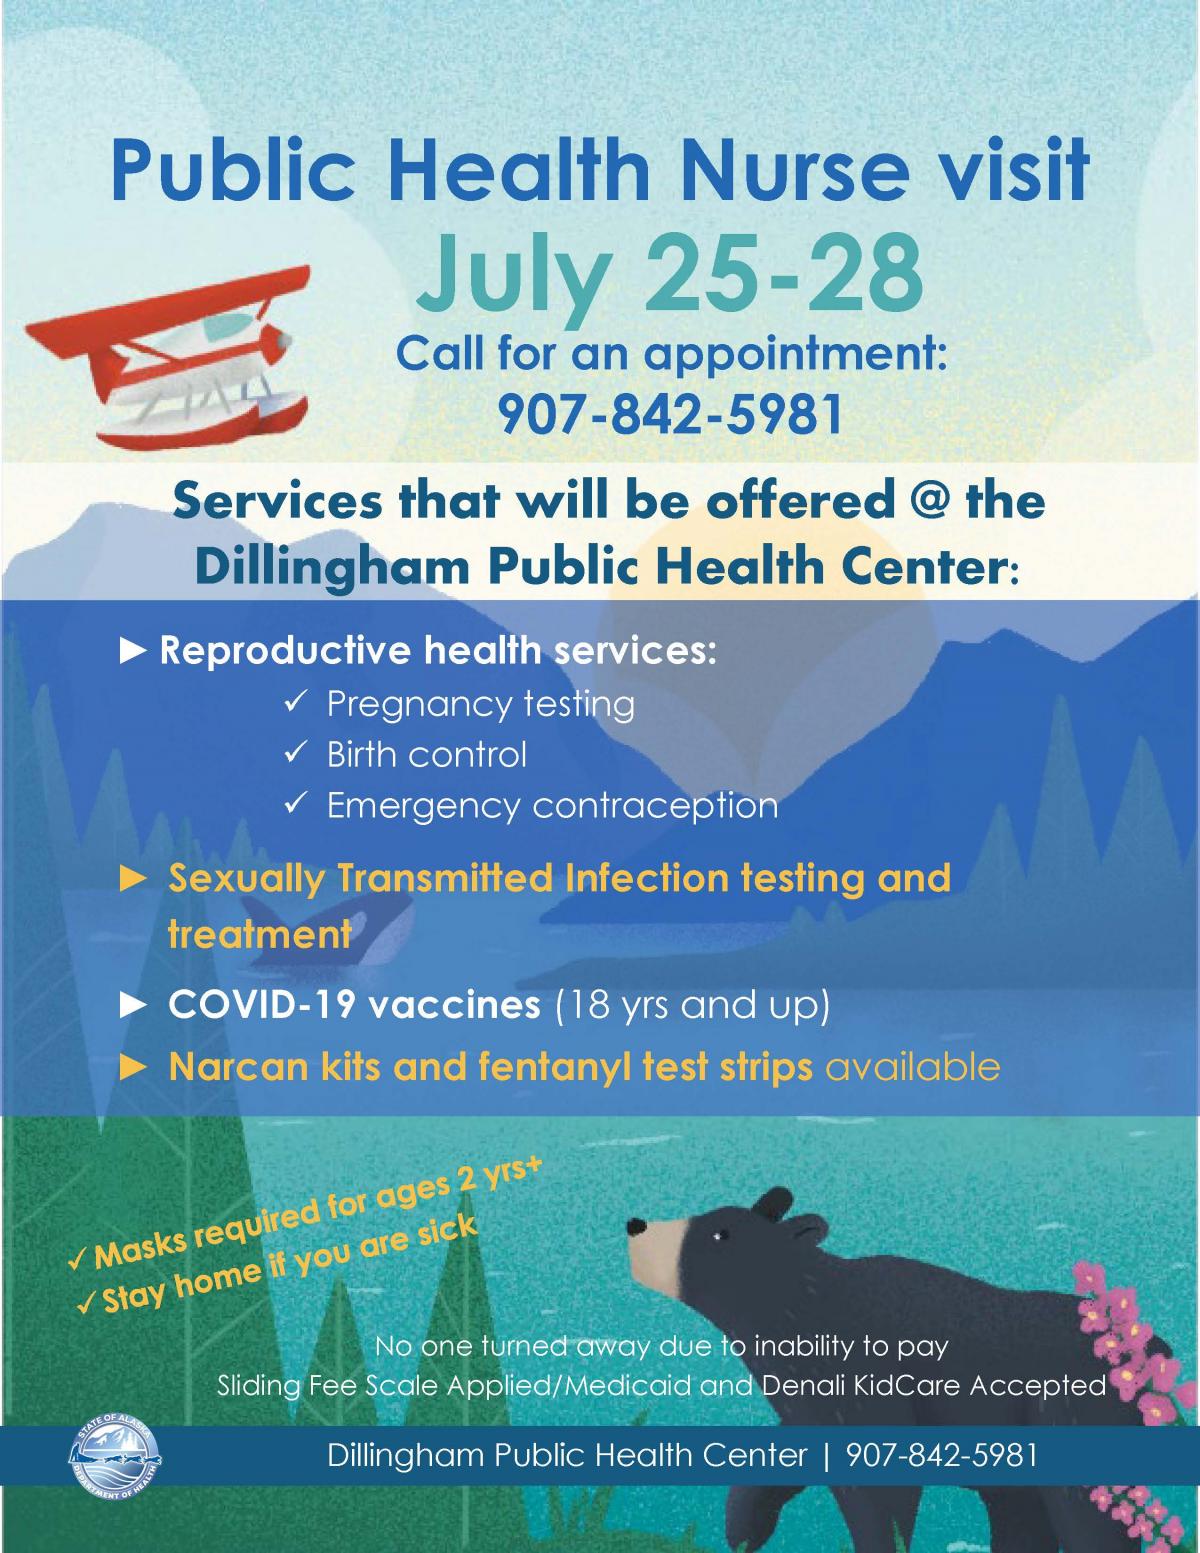 Public Health Nurse Visit - July 25 through July 28